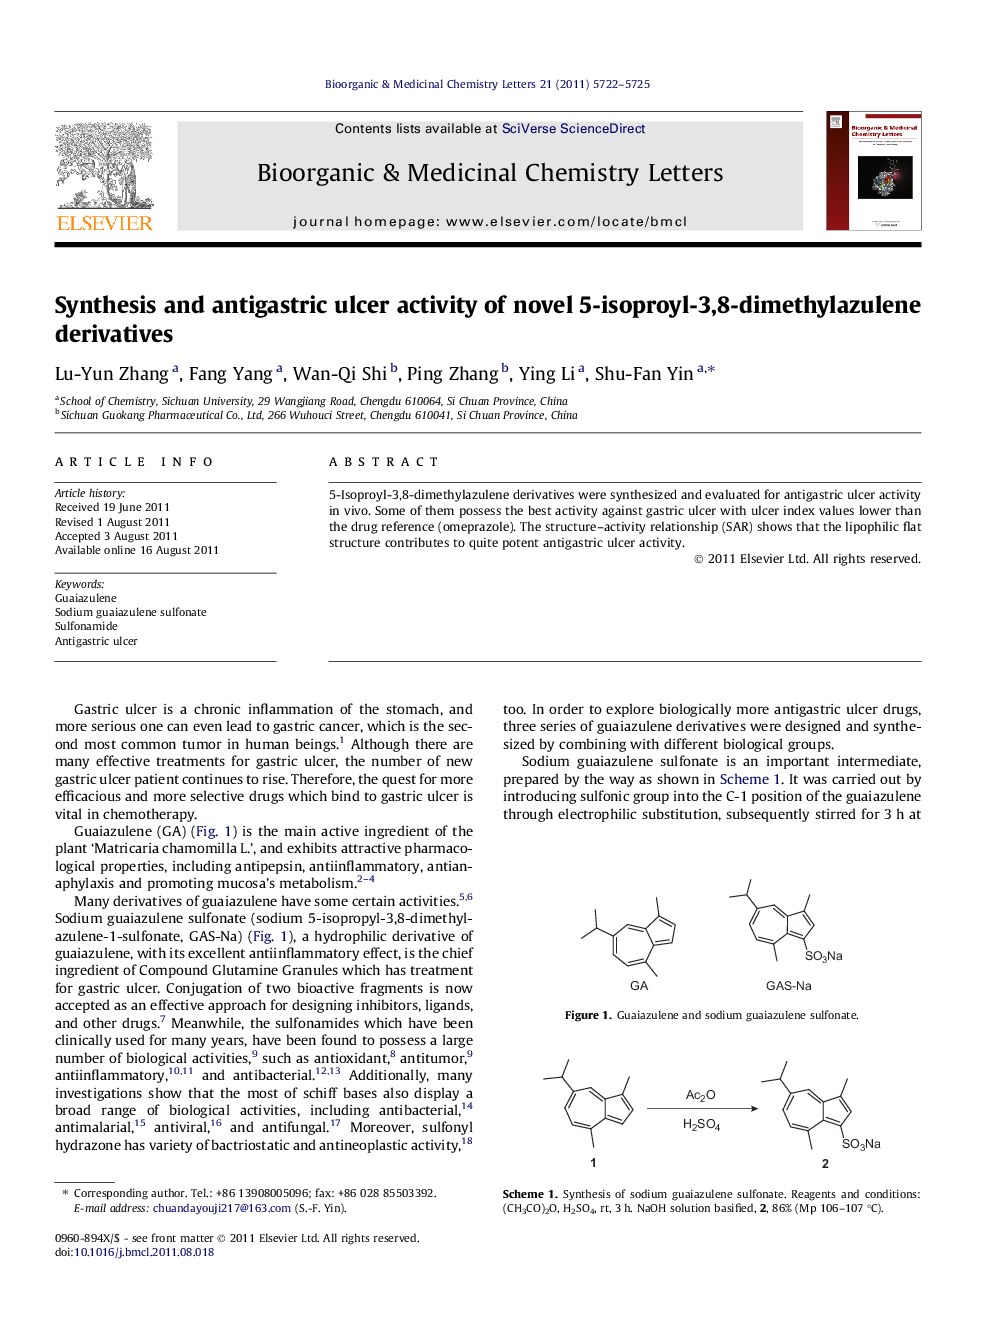 Synthesis and antigastric ulcer activity of novel 5-isoproyl-3,8-dimethylazulene derivatives